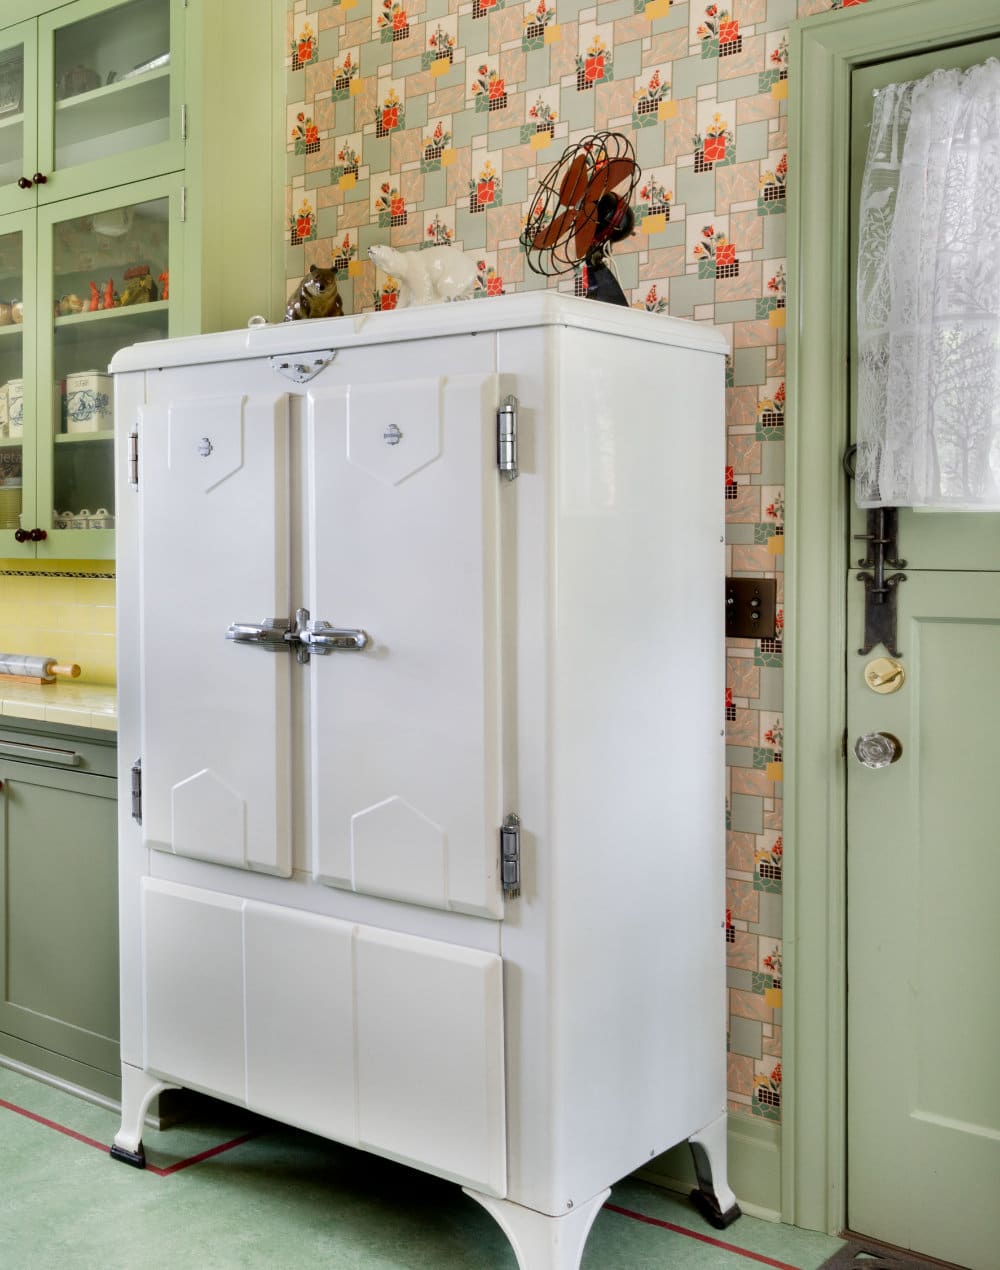 Antique white refrigerator